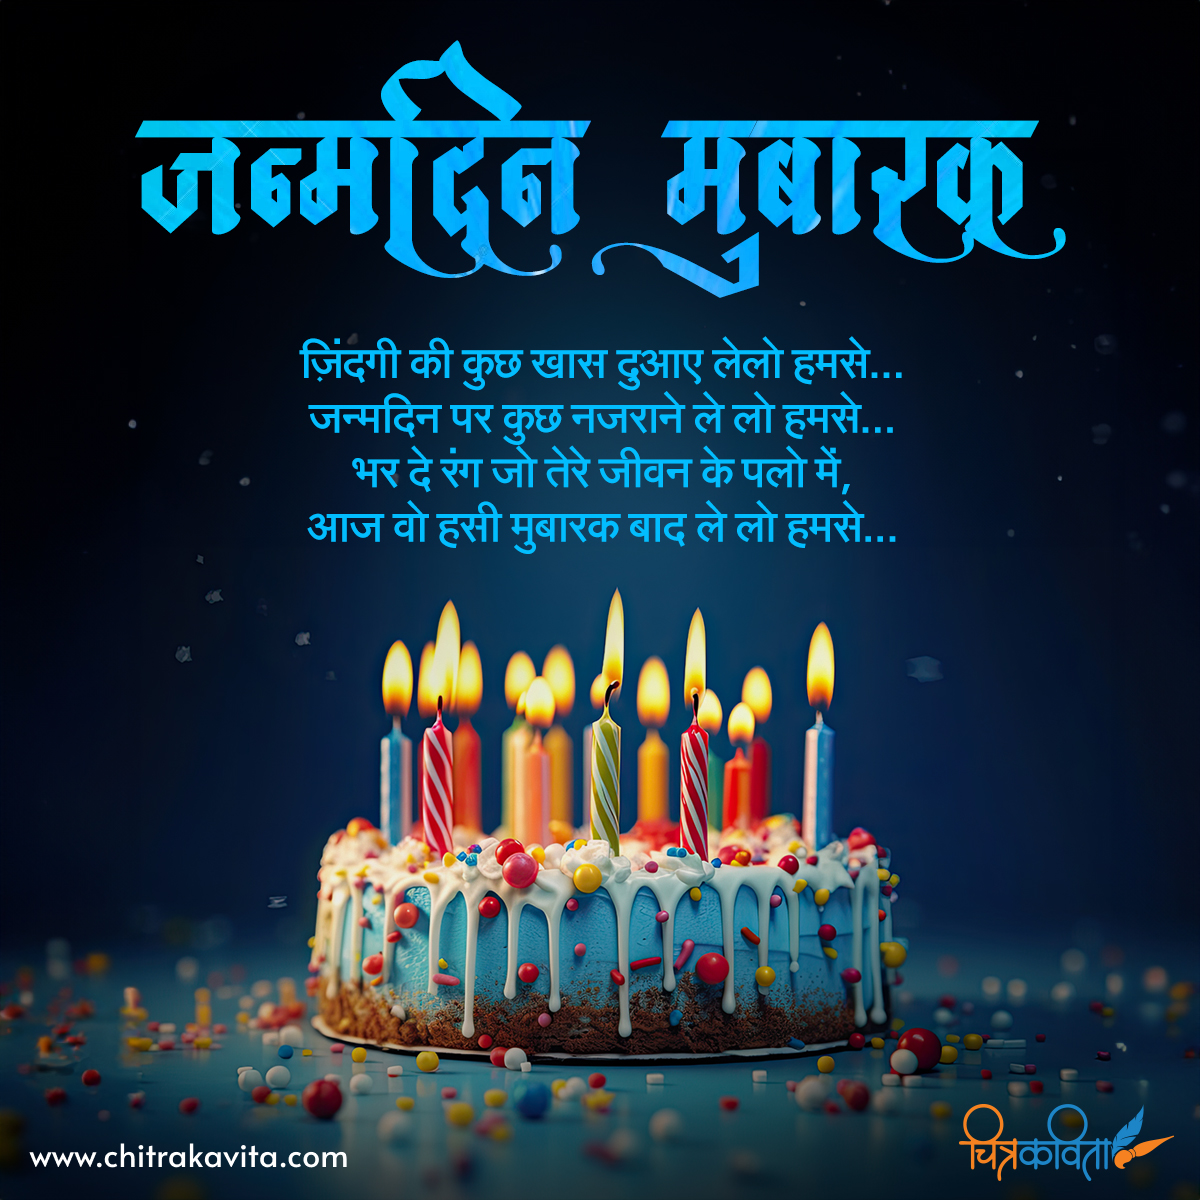 hindi birthday status, birthday wishes in hindi, hindi birthday quotes, birthday status in hindi, birthday messages in hindi, hindi birthday messages